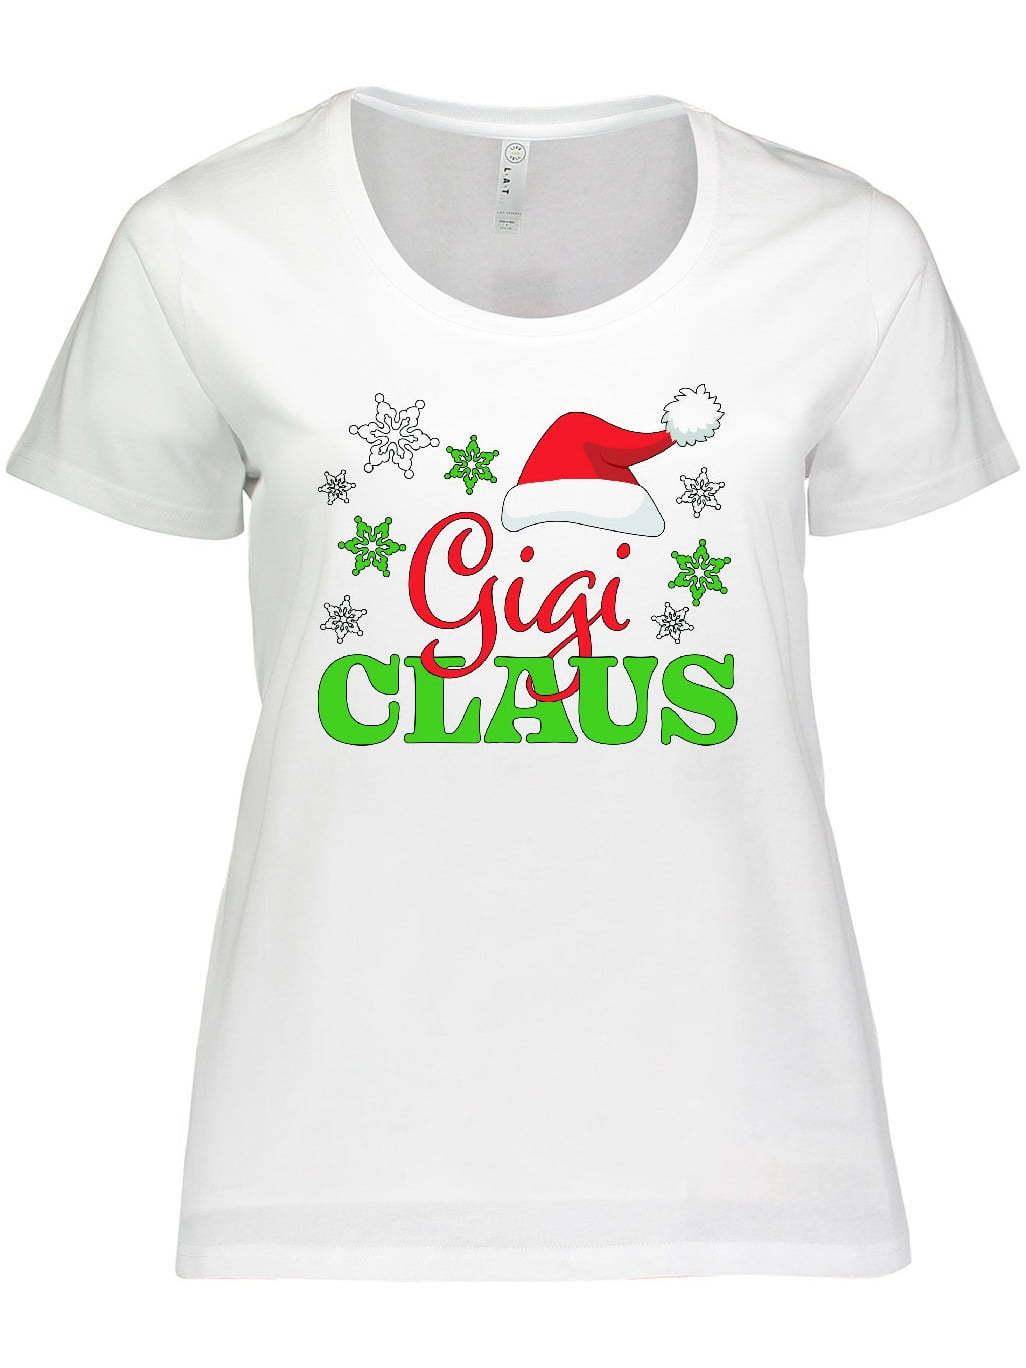 Pregnancy Reveal Ideas for Gigi Holiday Sale Women's Christmas Tee Shirt with Buffalo Plaid Print and Santa Gigi Gift for Gigi